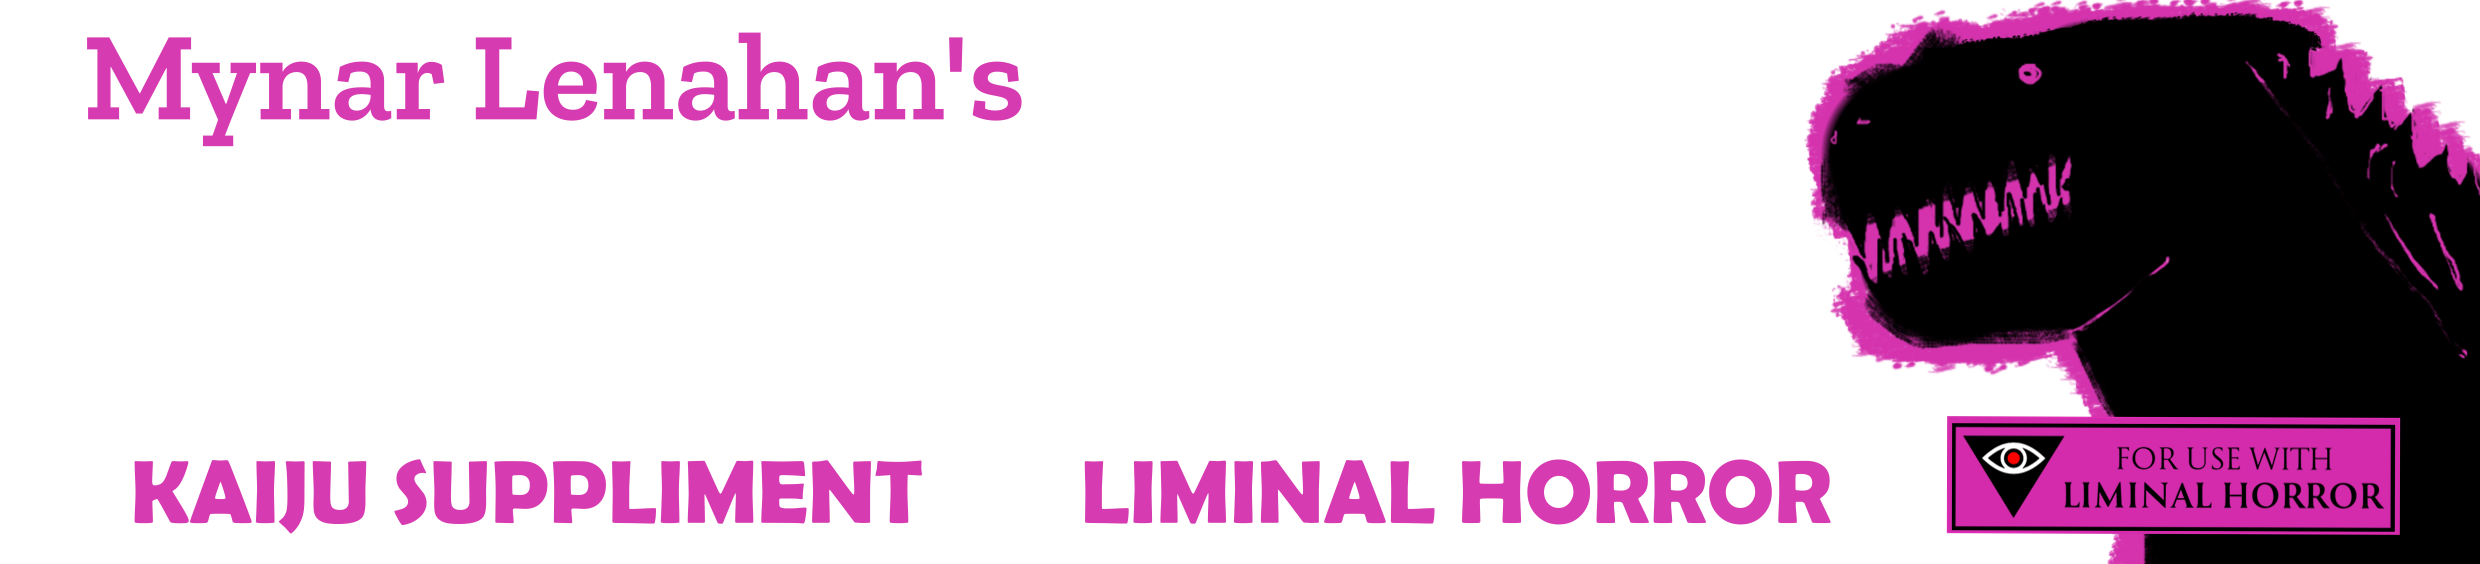 Liminal Colossus